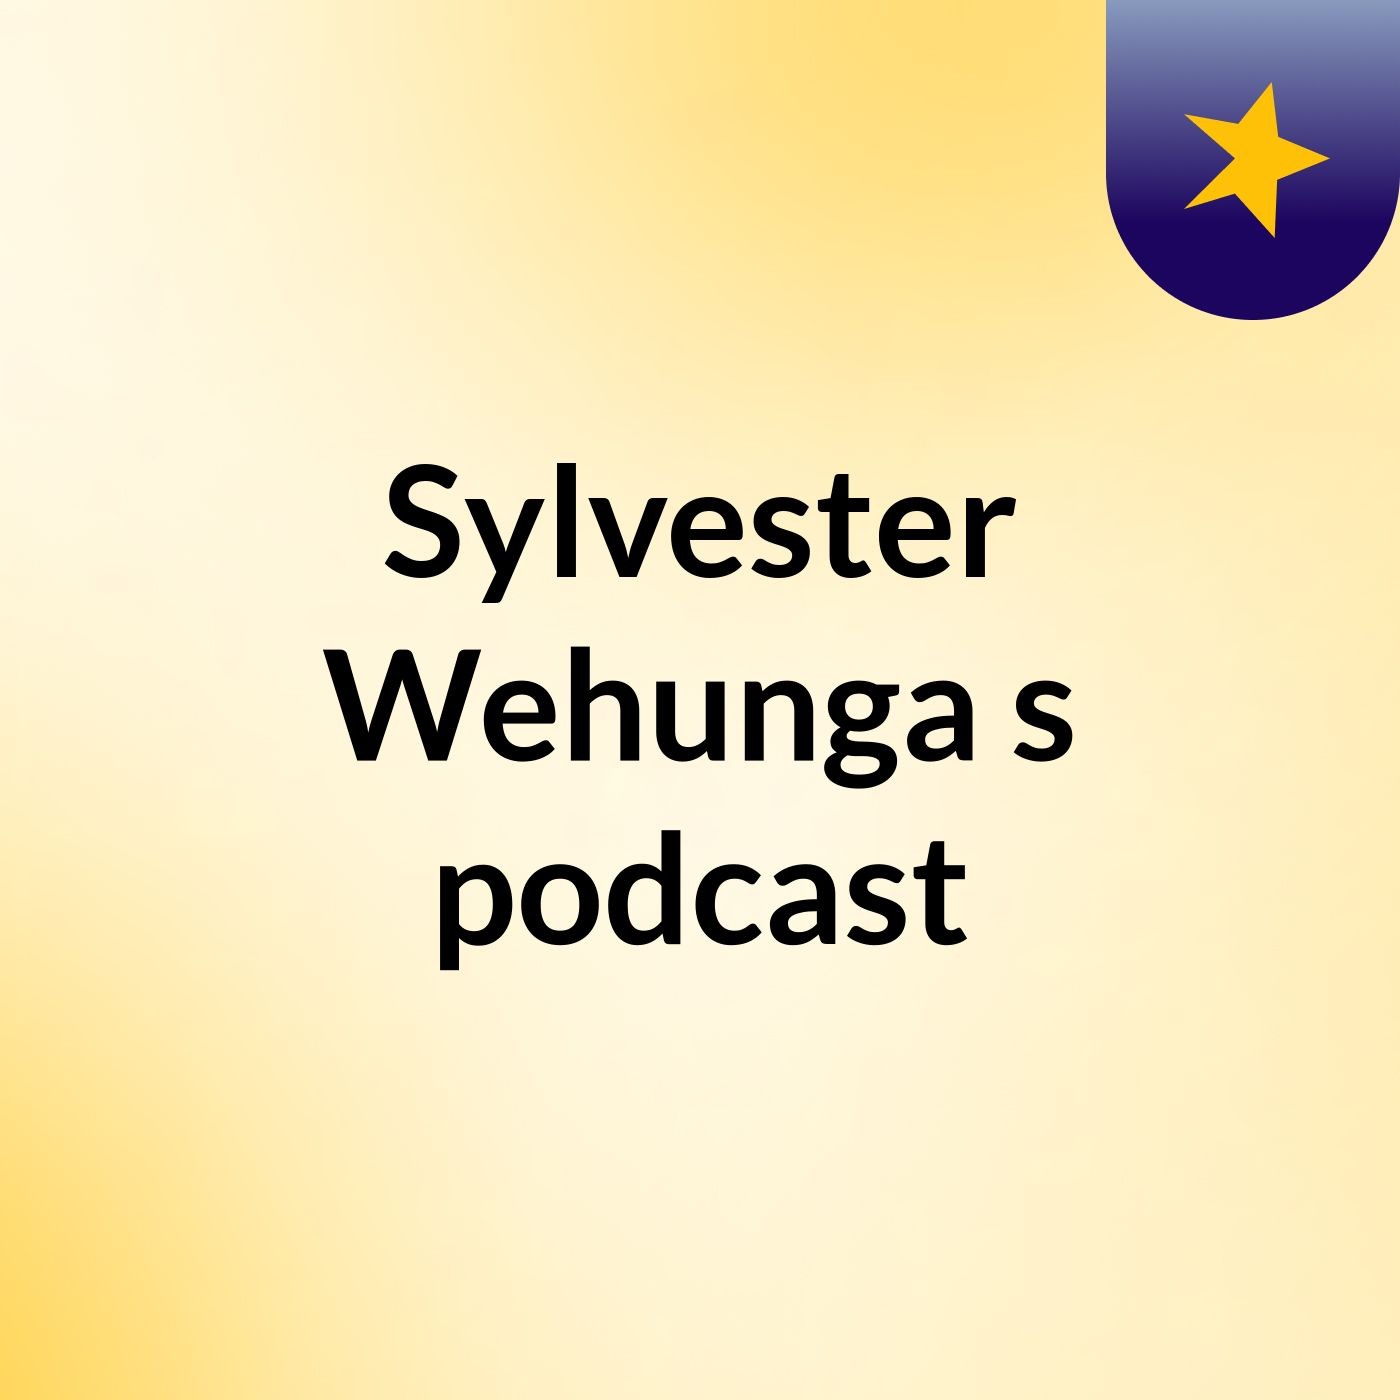 Sylvester Wehunga's podcast